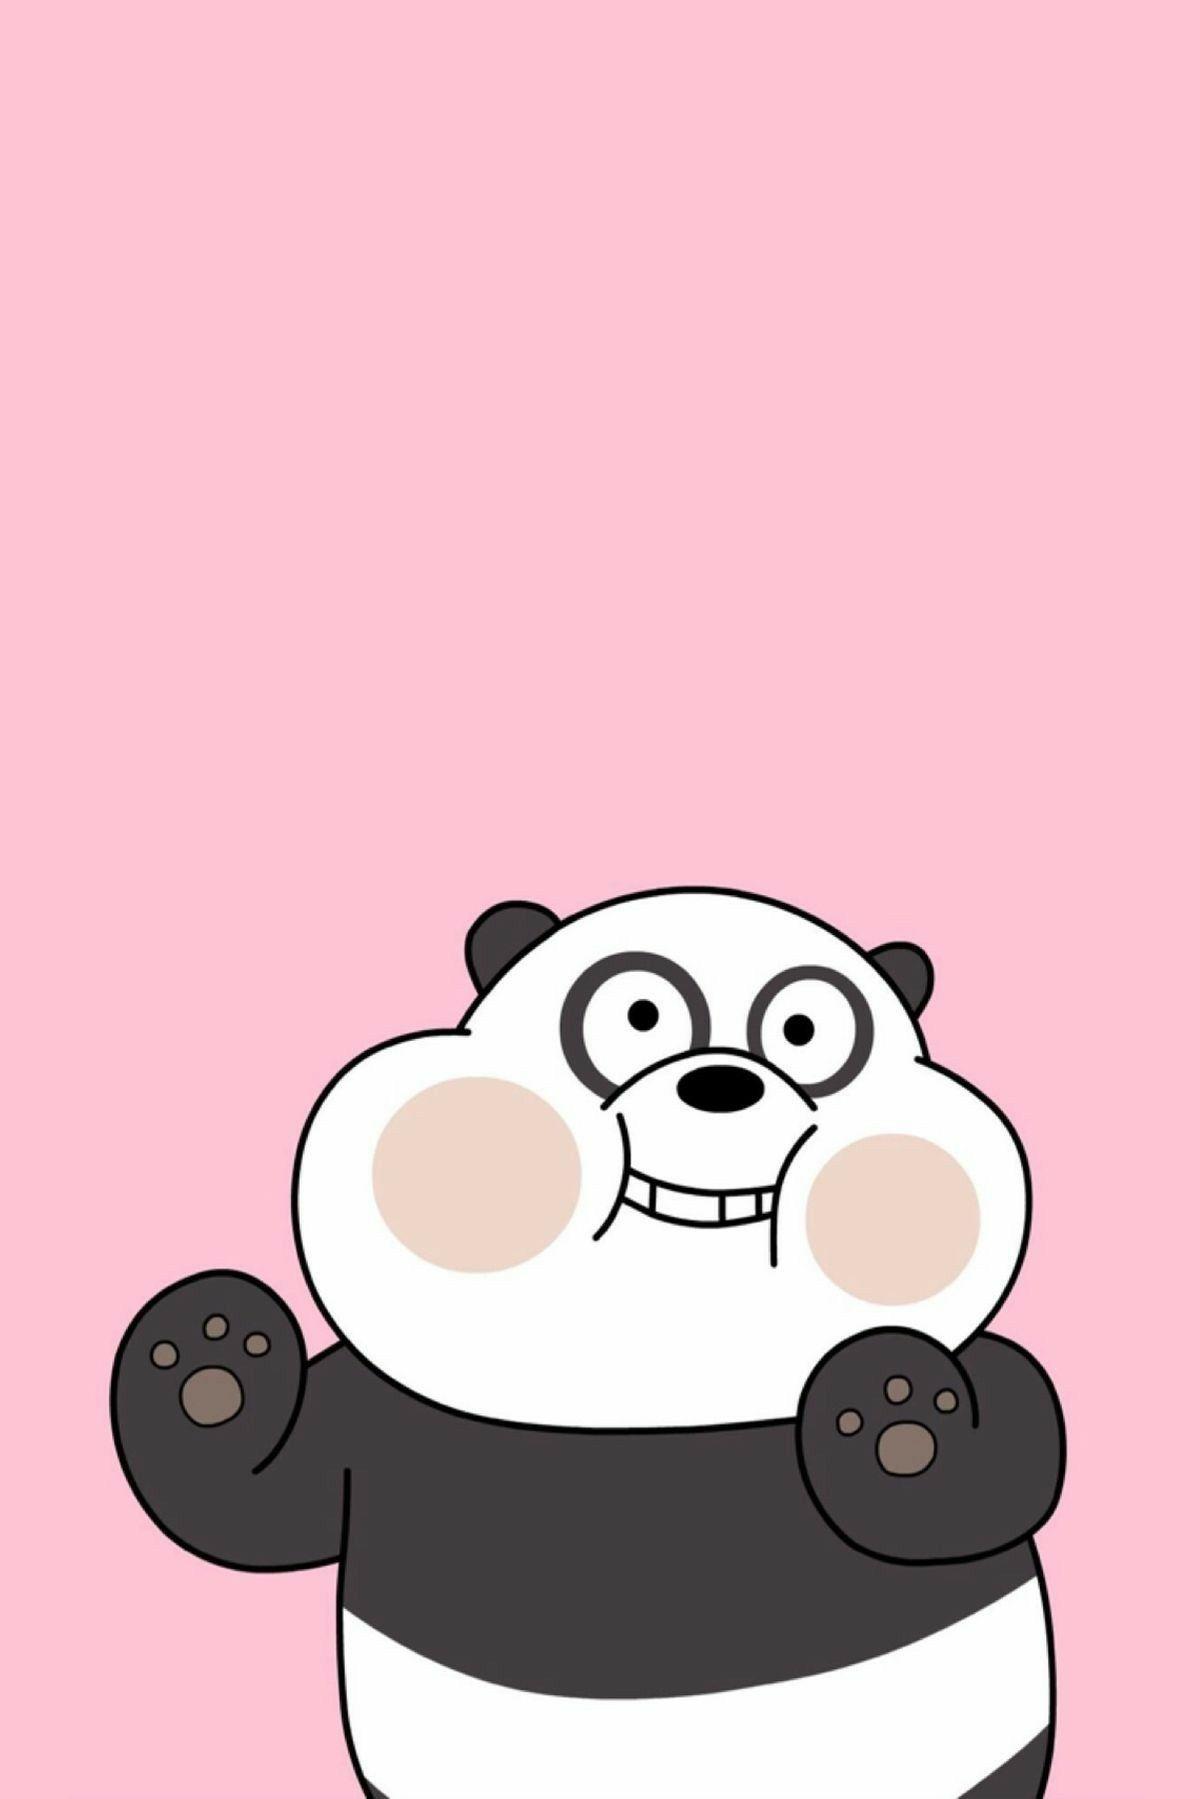 Wallpaper Android Panda Cute With Hd Resolution  Hình Nền Panda Cute   1080x1920 Wallpaper  teahubio